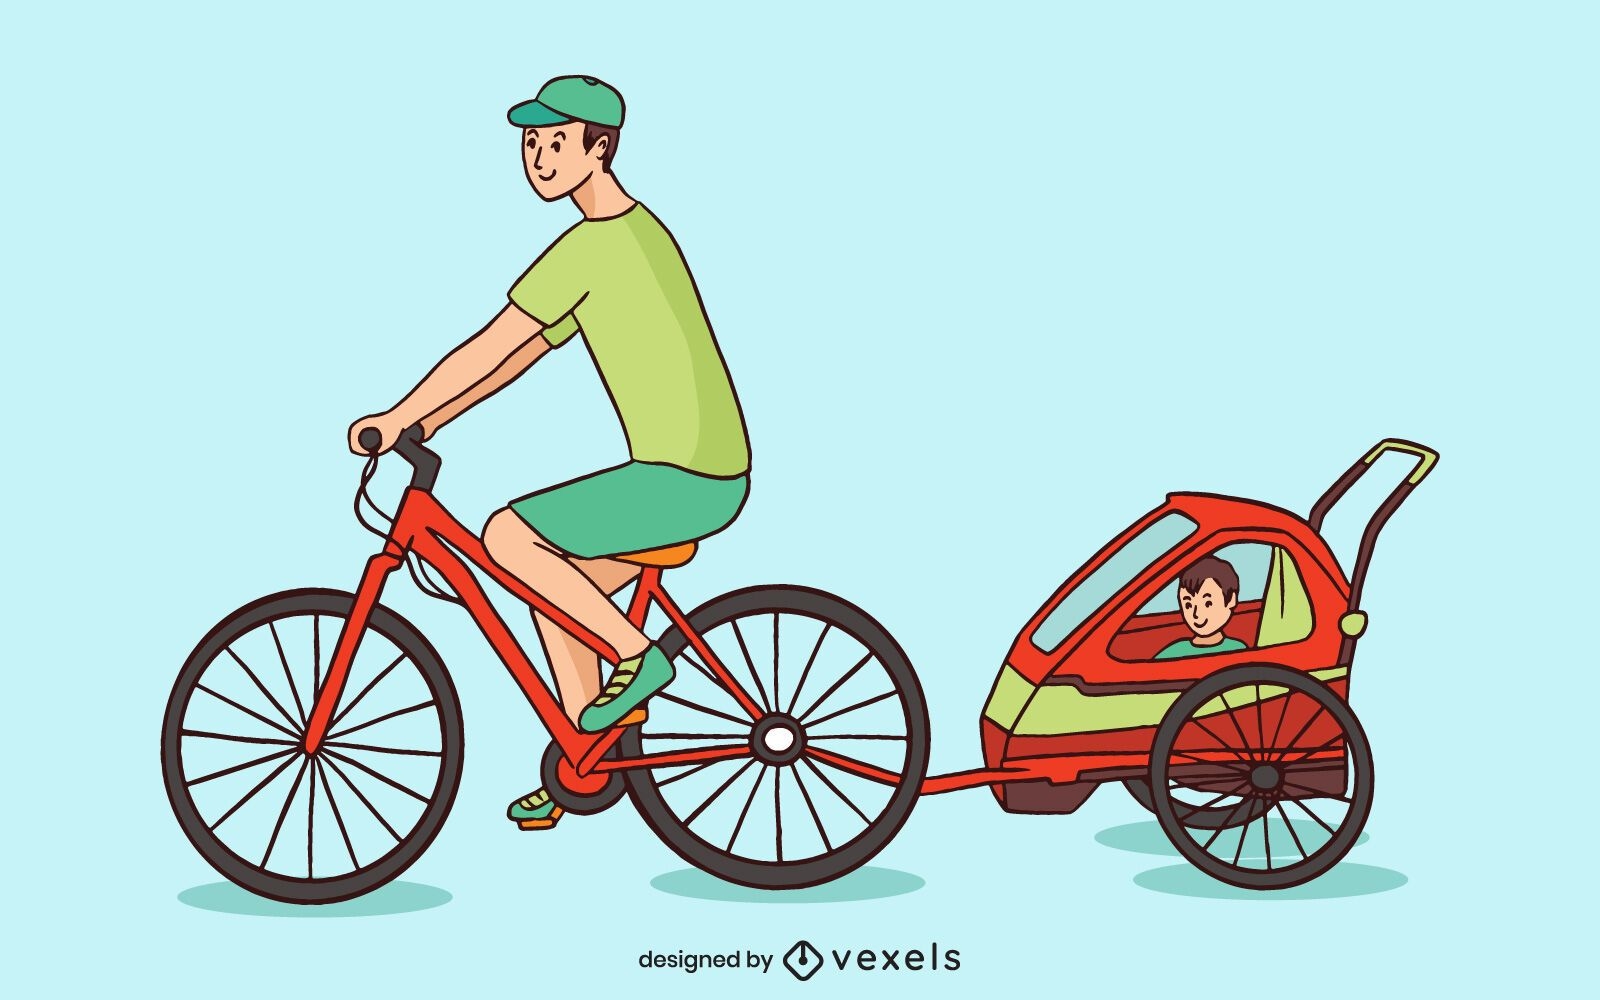 Bike trailer illustration design